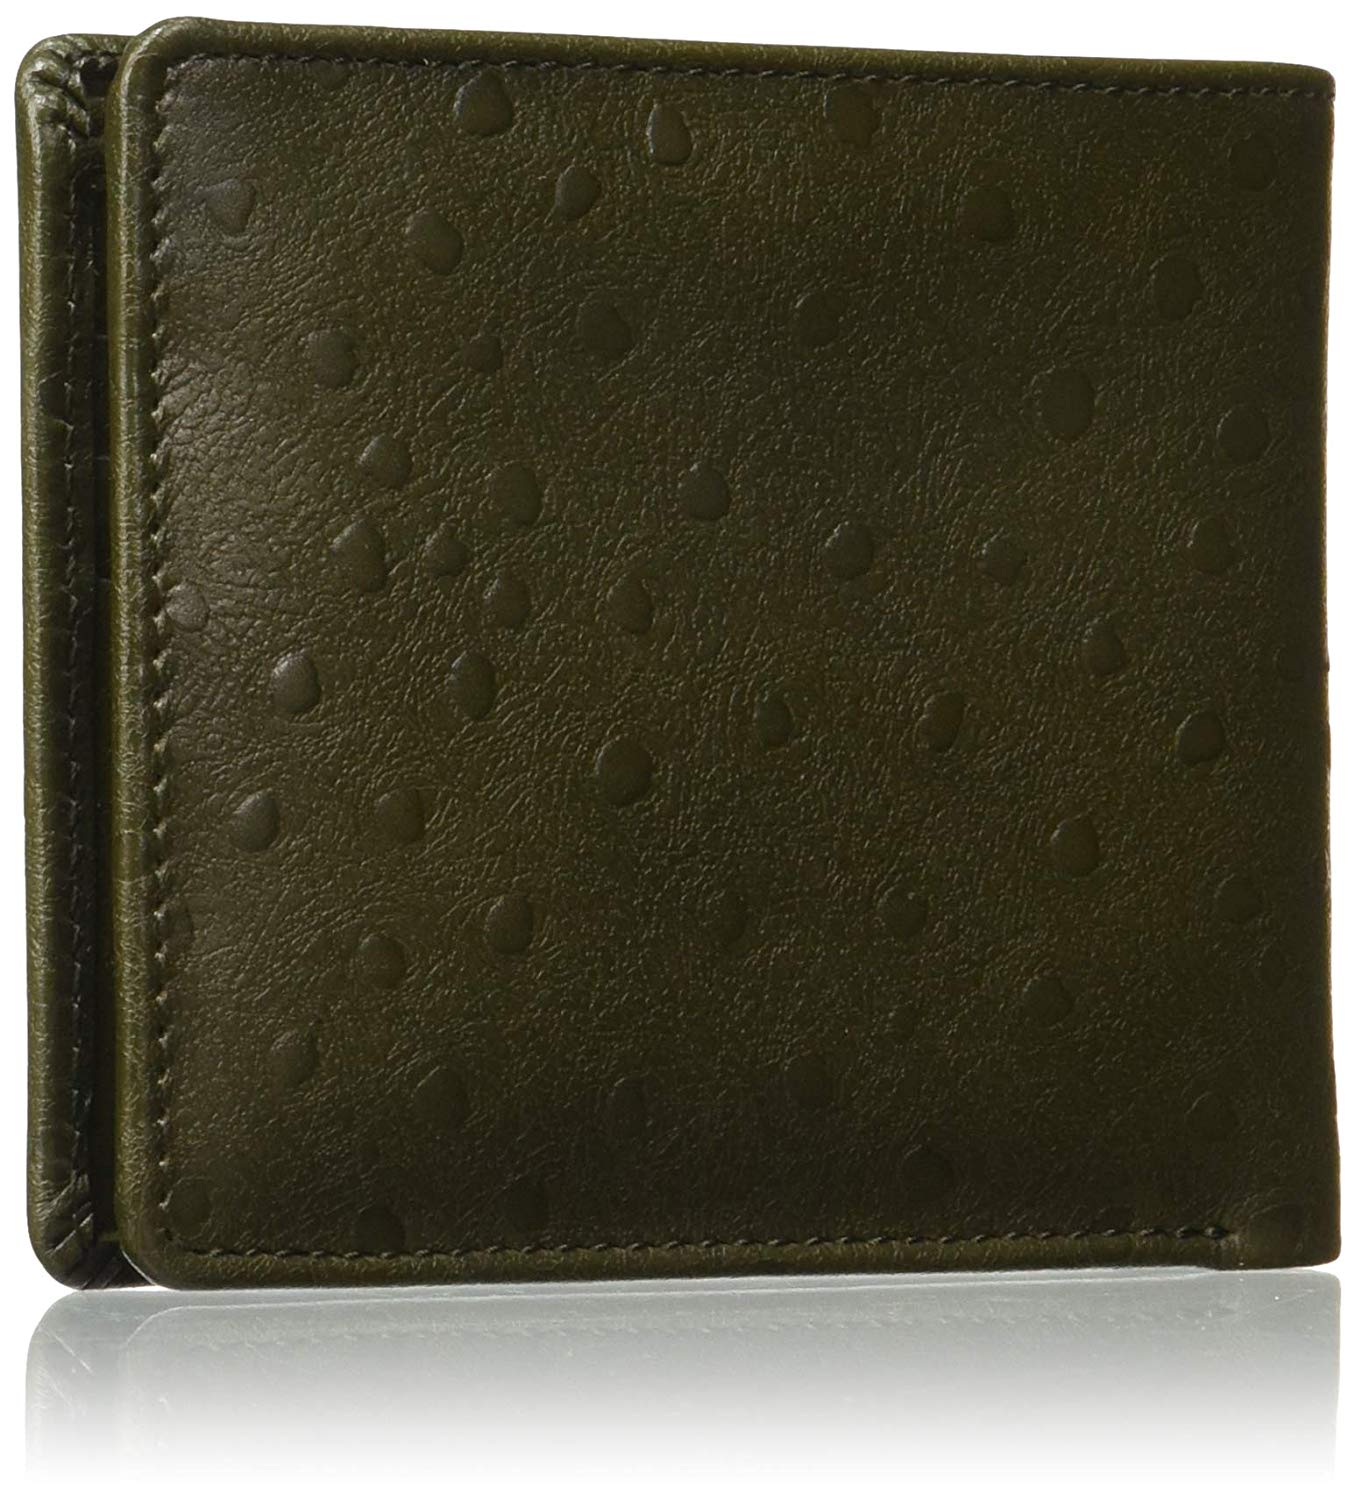 Olive Colour Bi-Fold Italian Leather Slim Wallet ( 6 Card Slot + 2 Hidden Compartment + Cash Compartment )